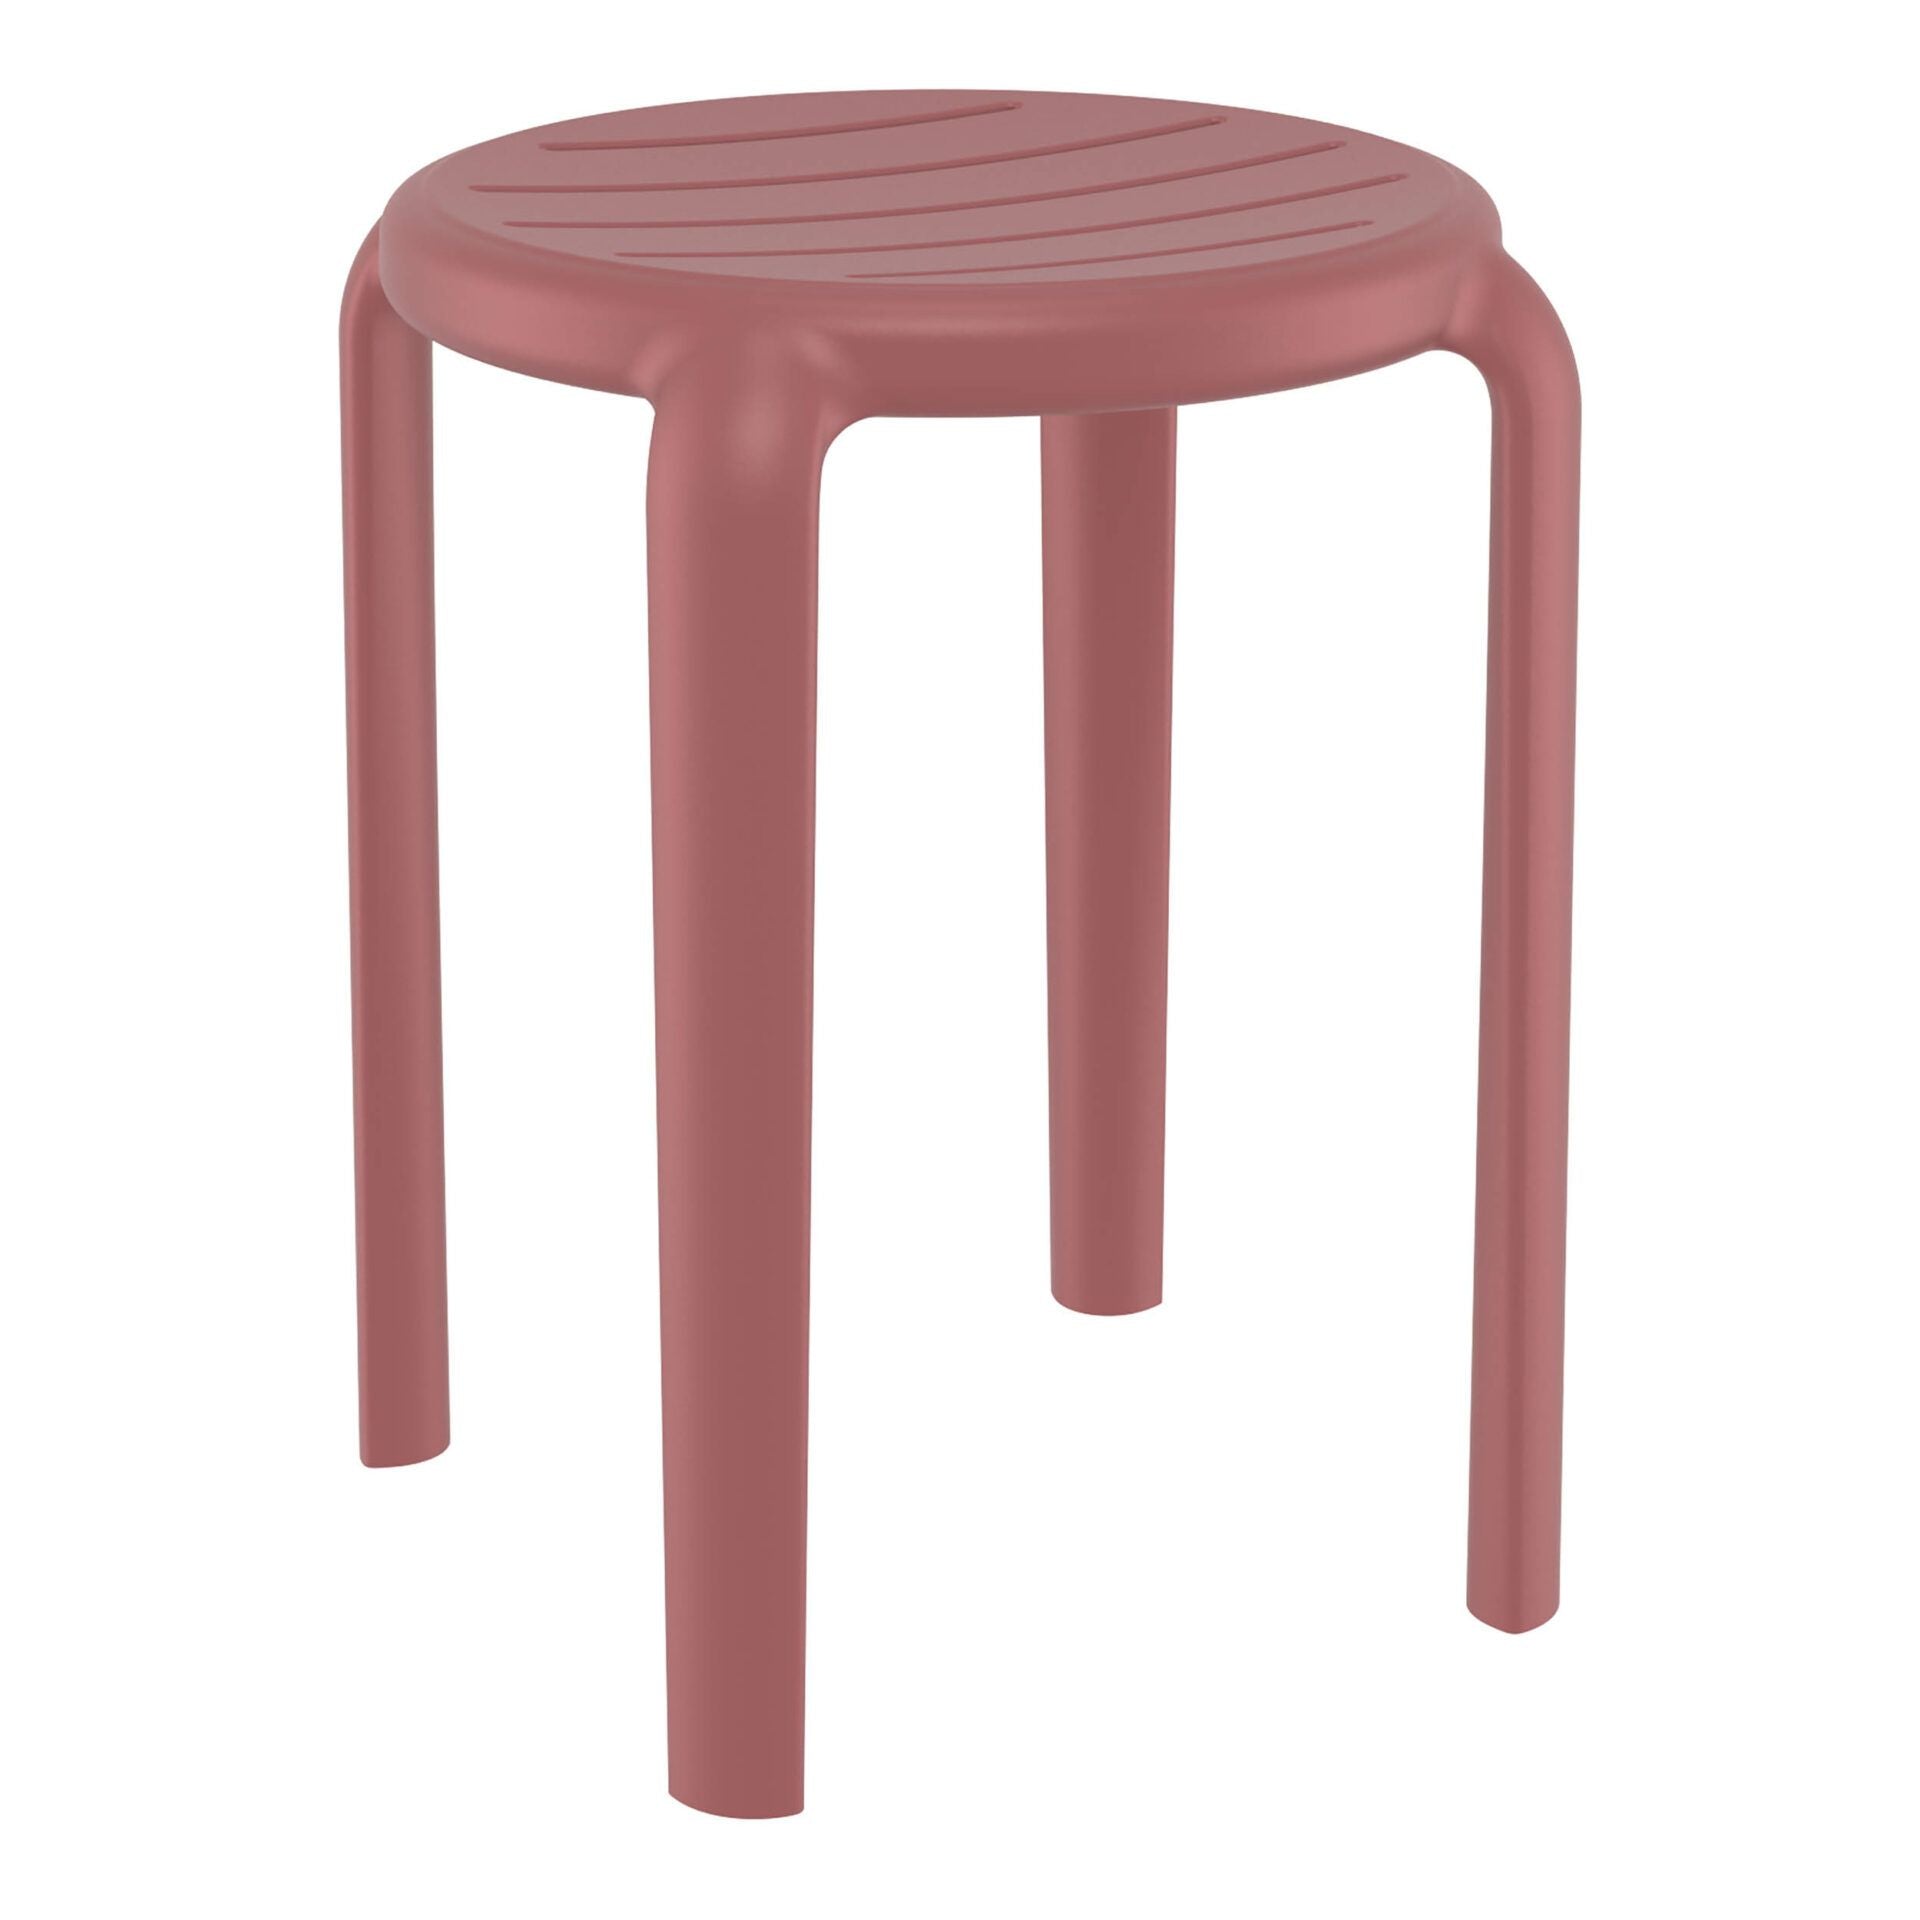 Shower stool &quot;Tom&quot; marsala colour side view